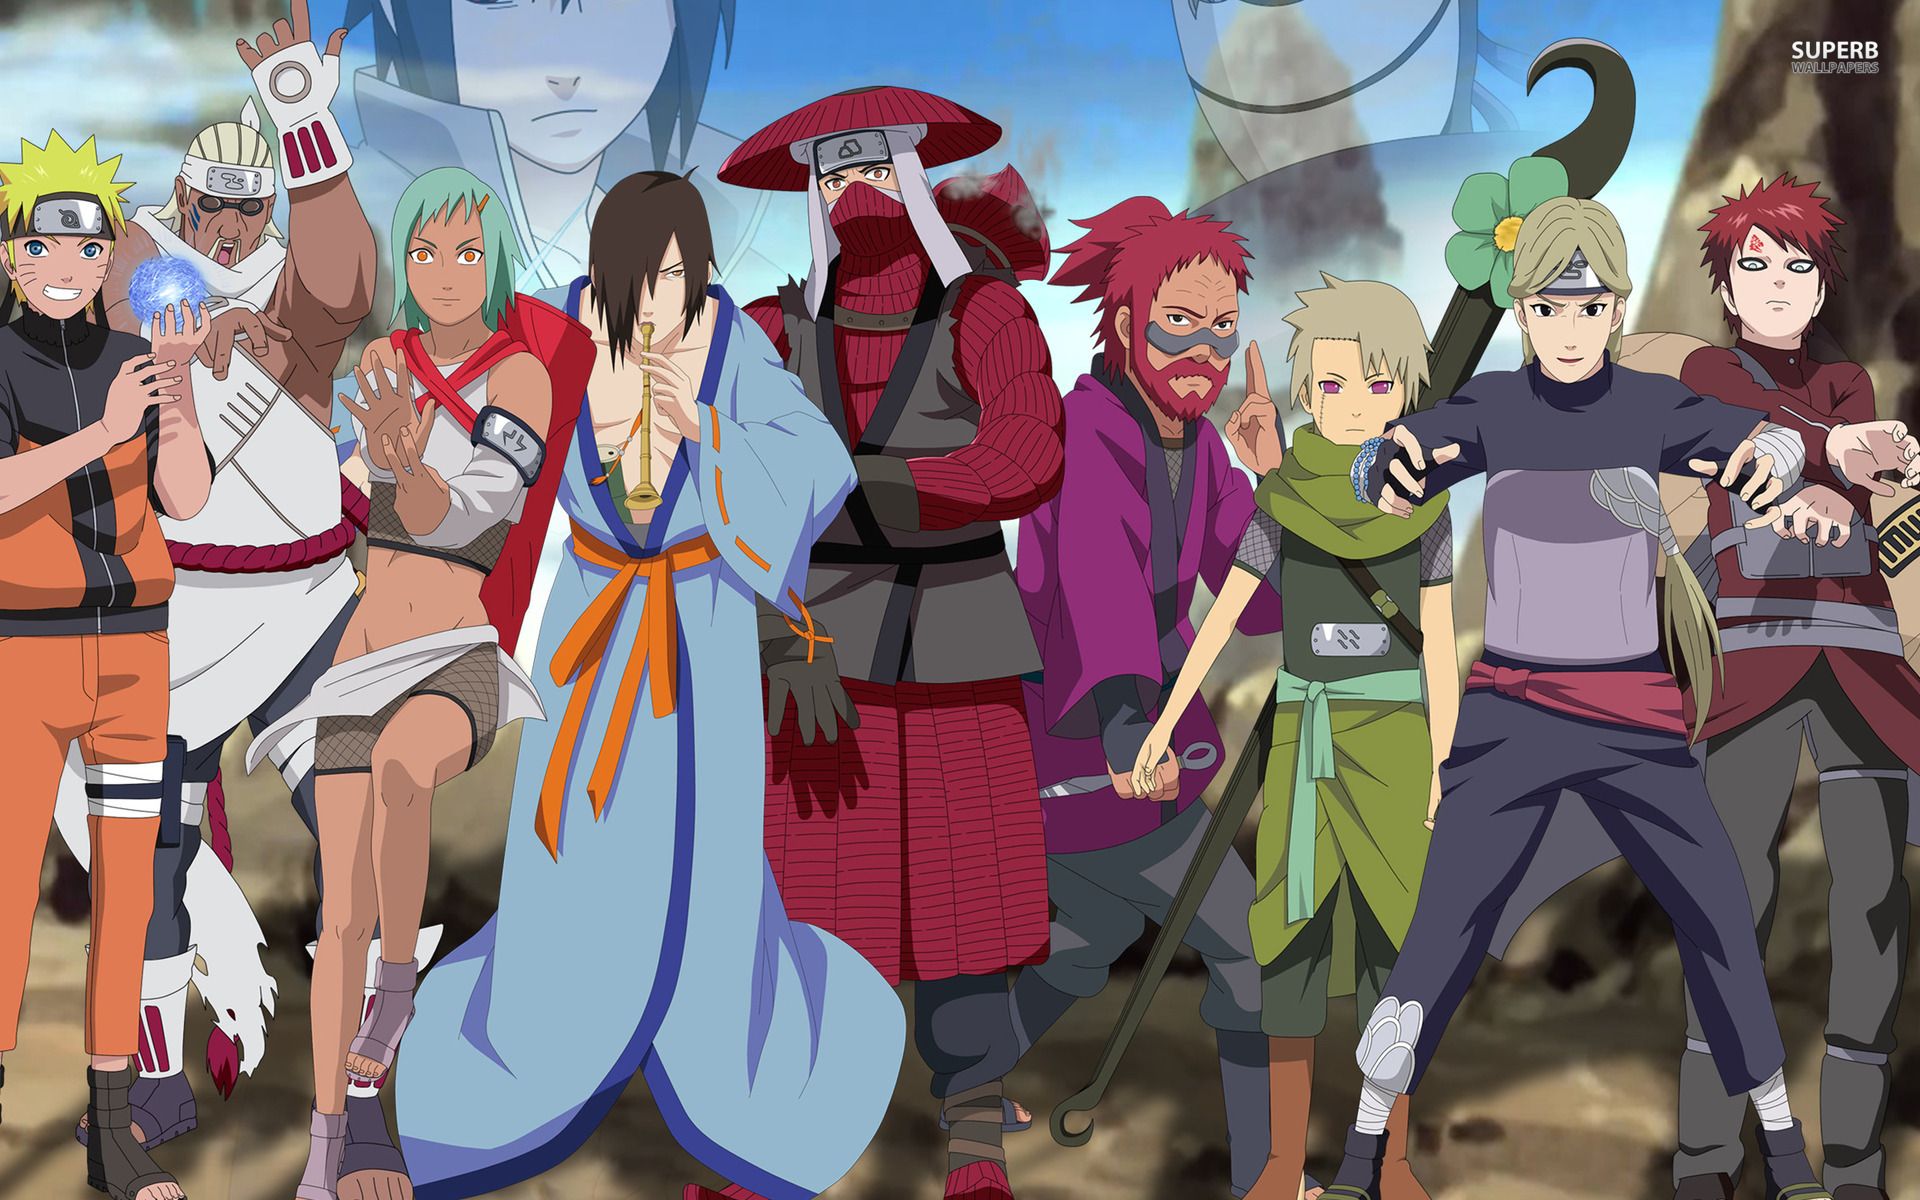 Naruto Shippuden wallpaper - Anime wallpapers -